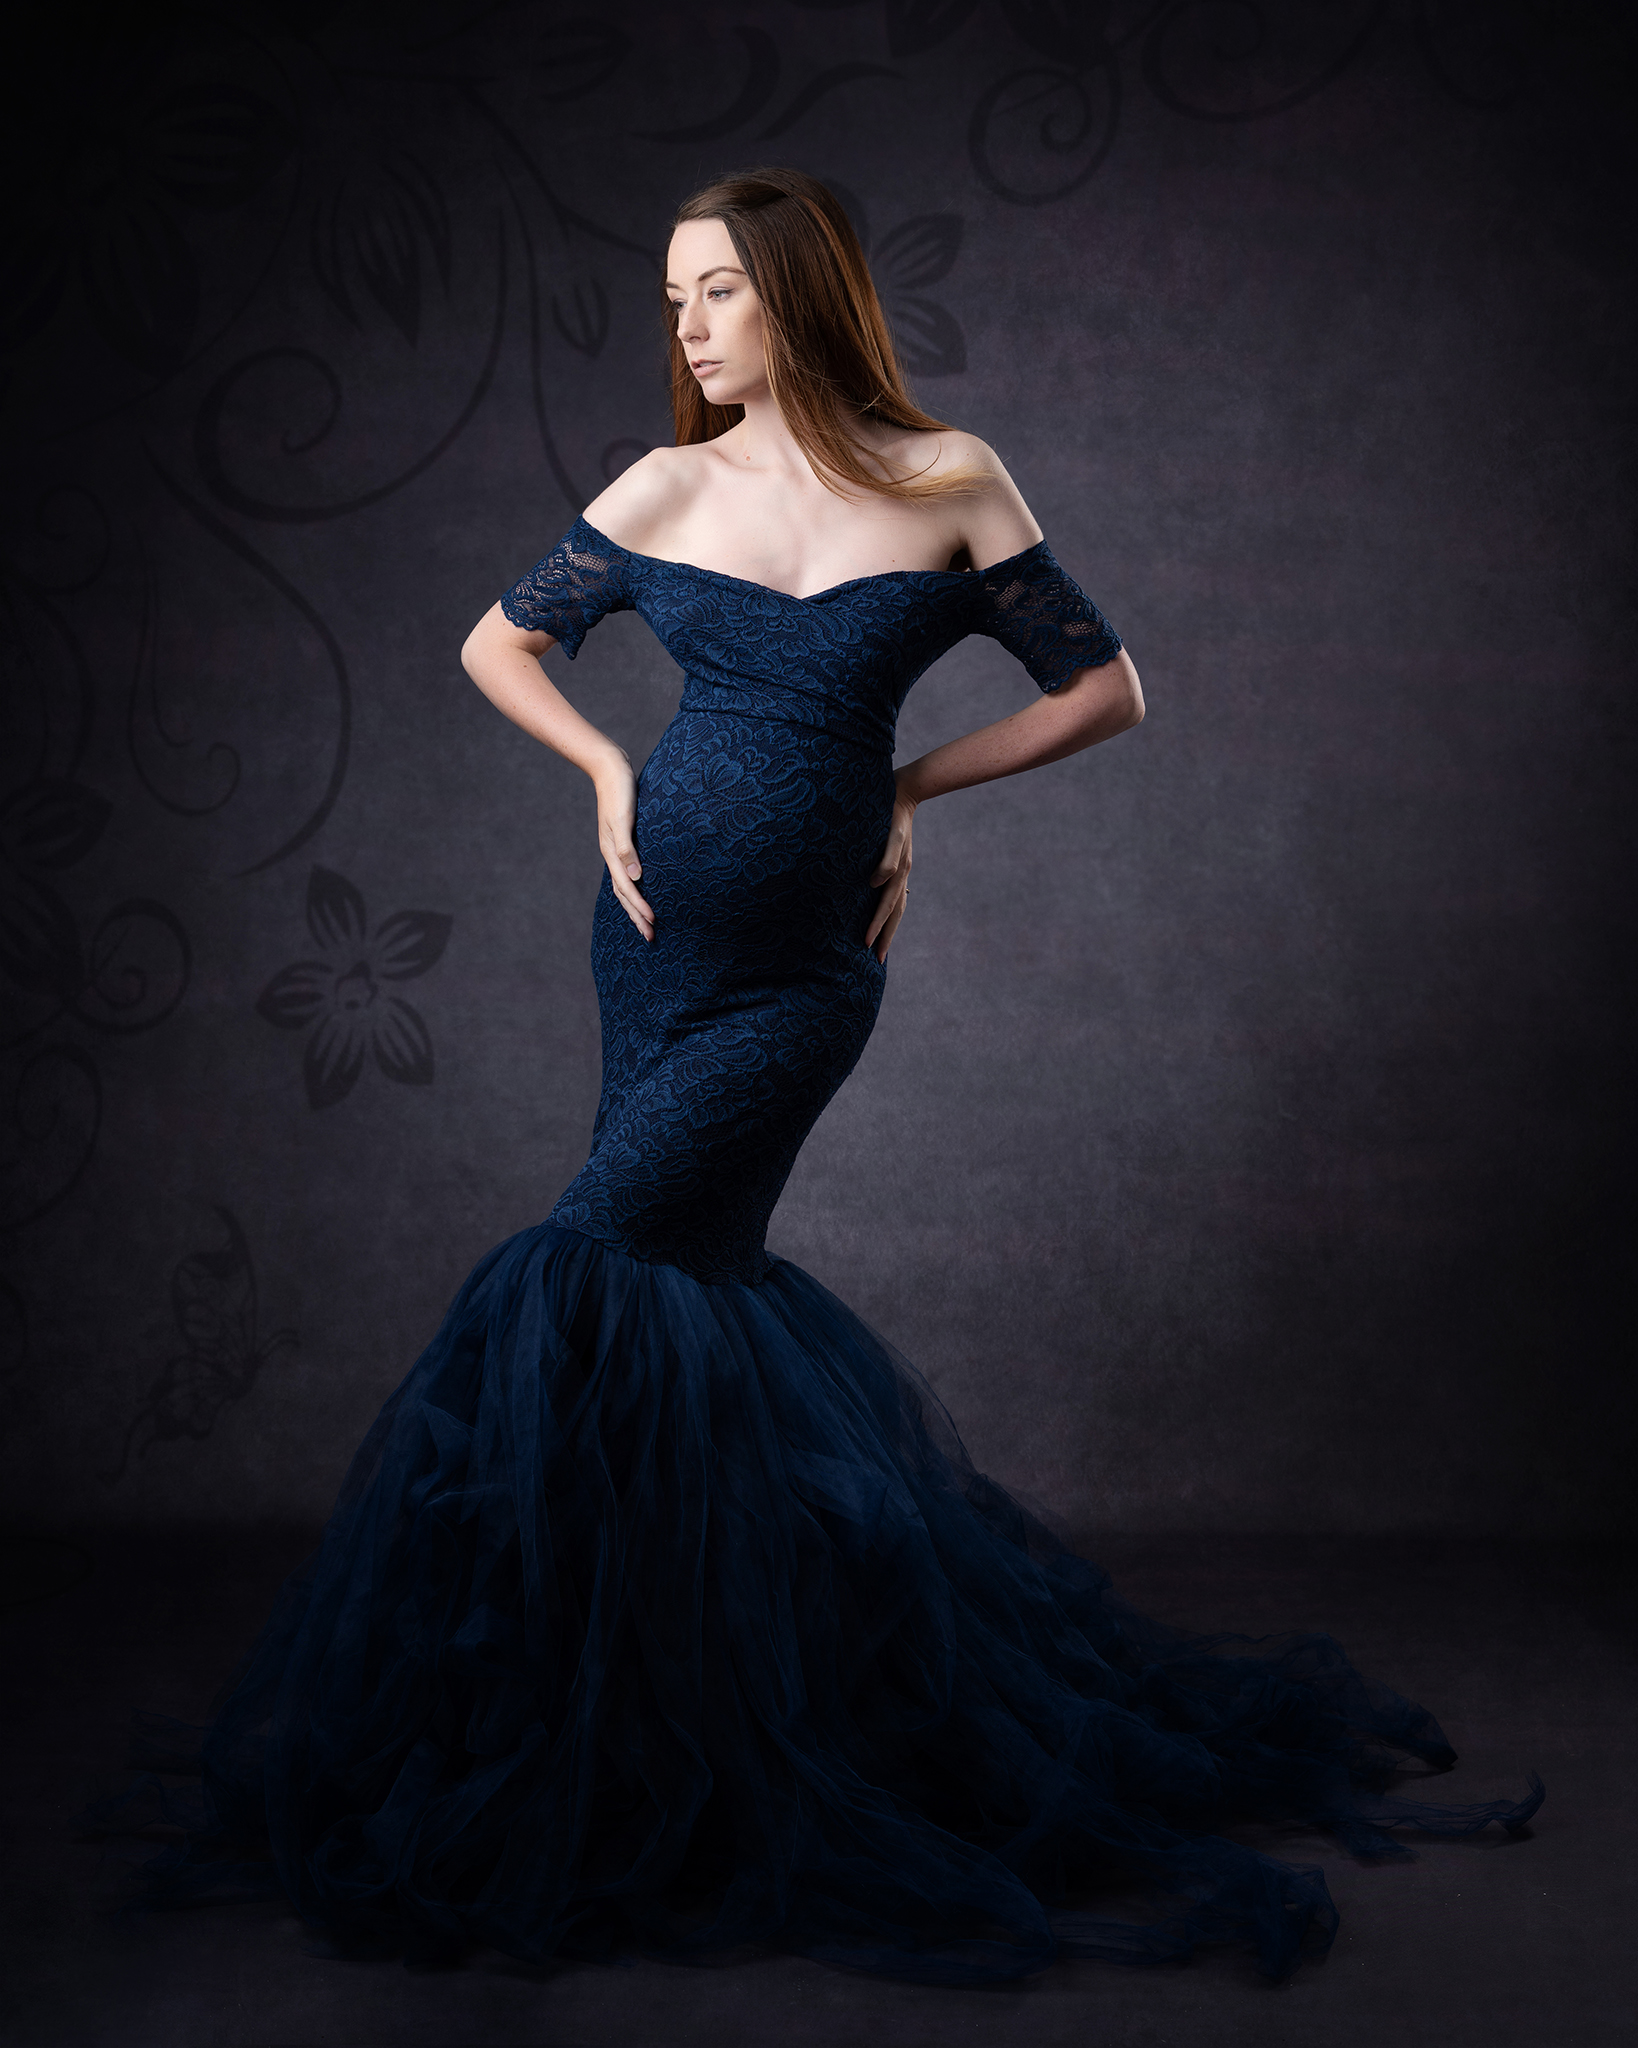 pregnant model in blue fress by Portrait photographer Preston